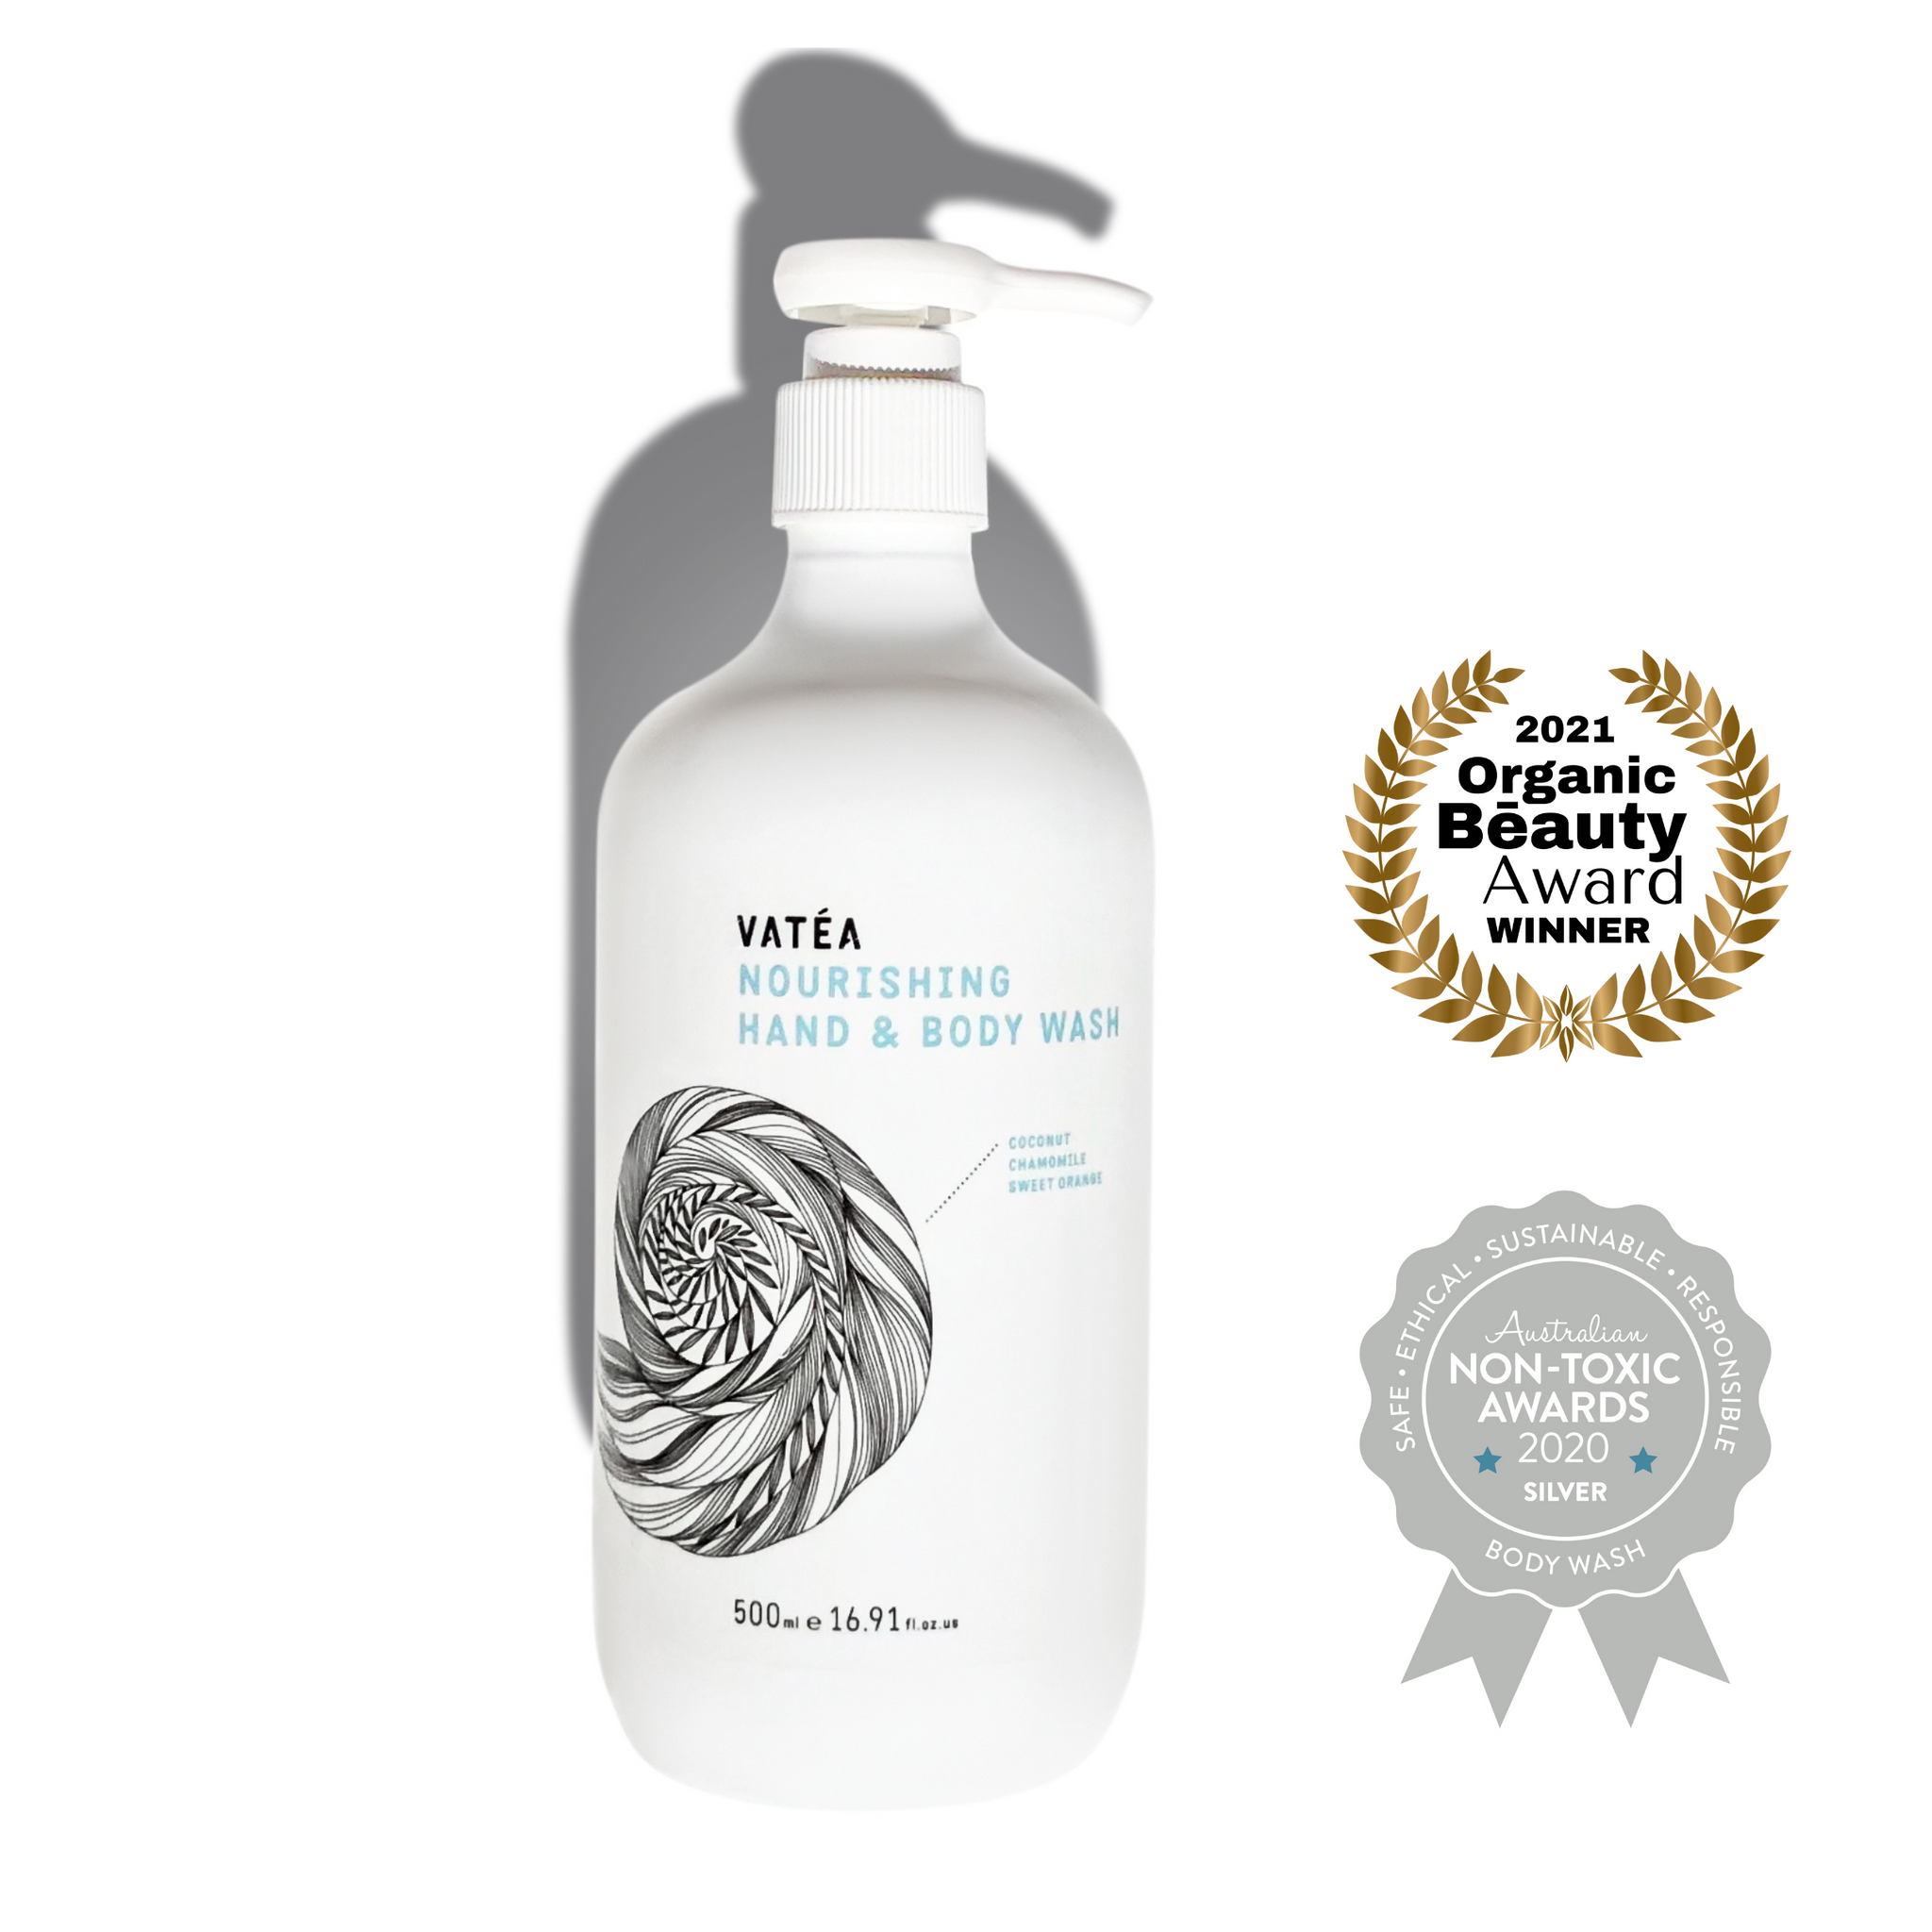 Award Winning Natural and Phthalate Free Body Wash with moringa and tamanu oil to nourish and nurture your skin. 